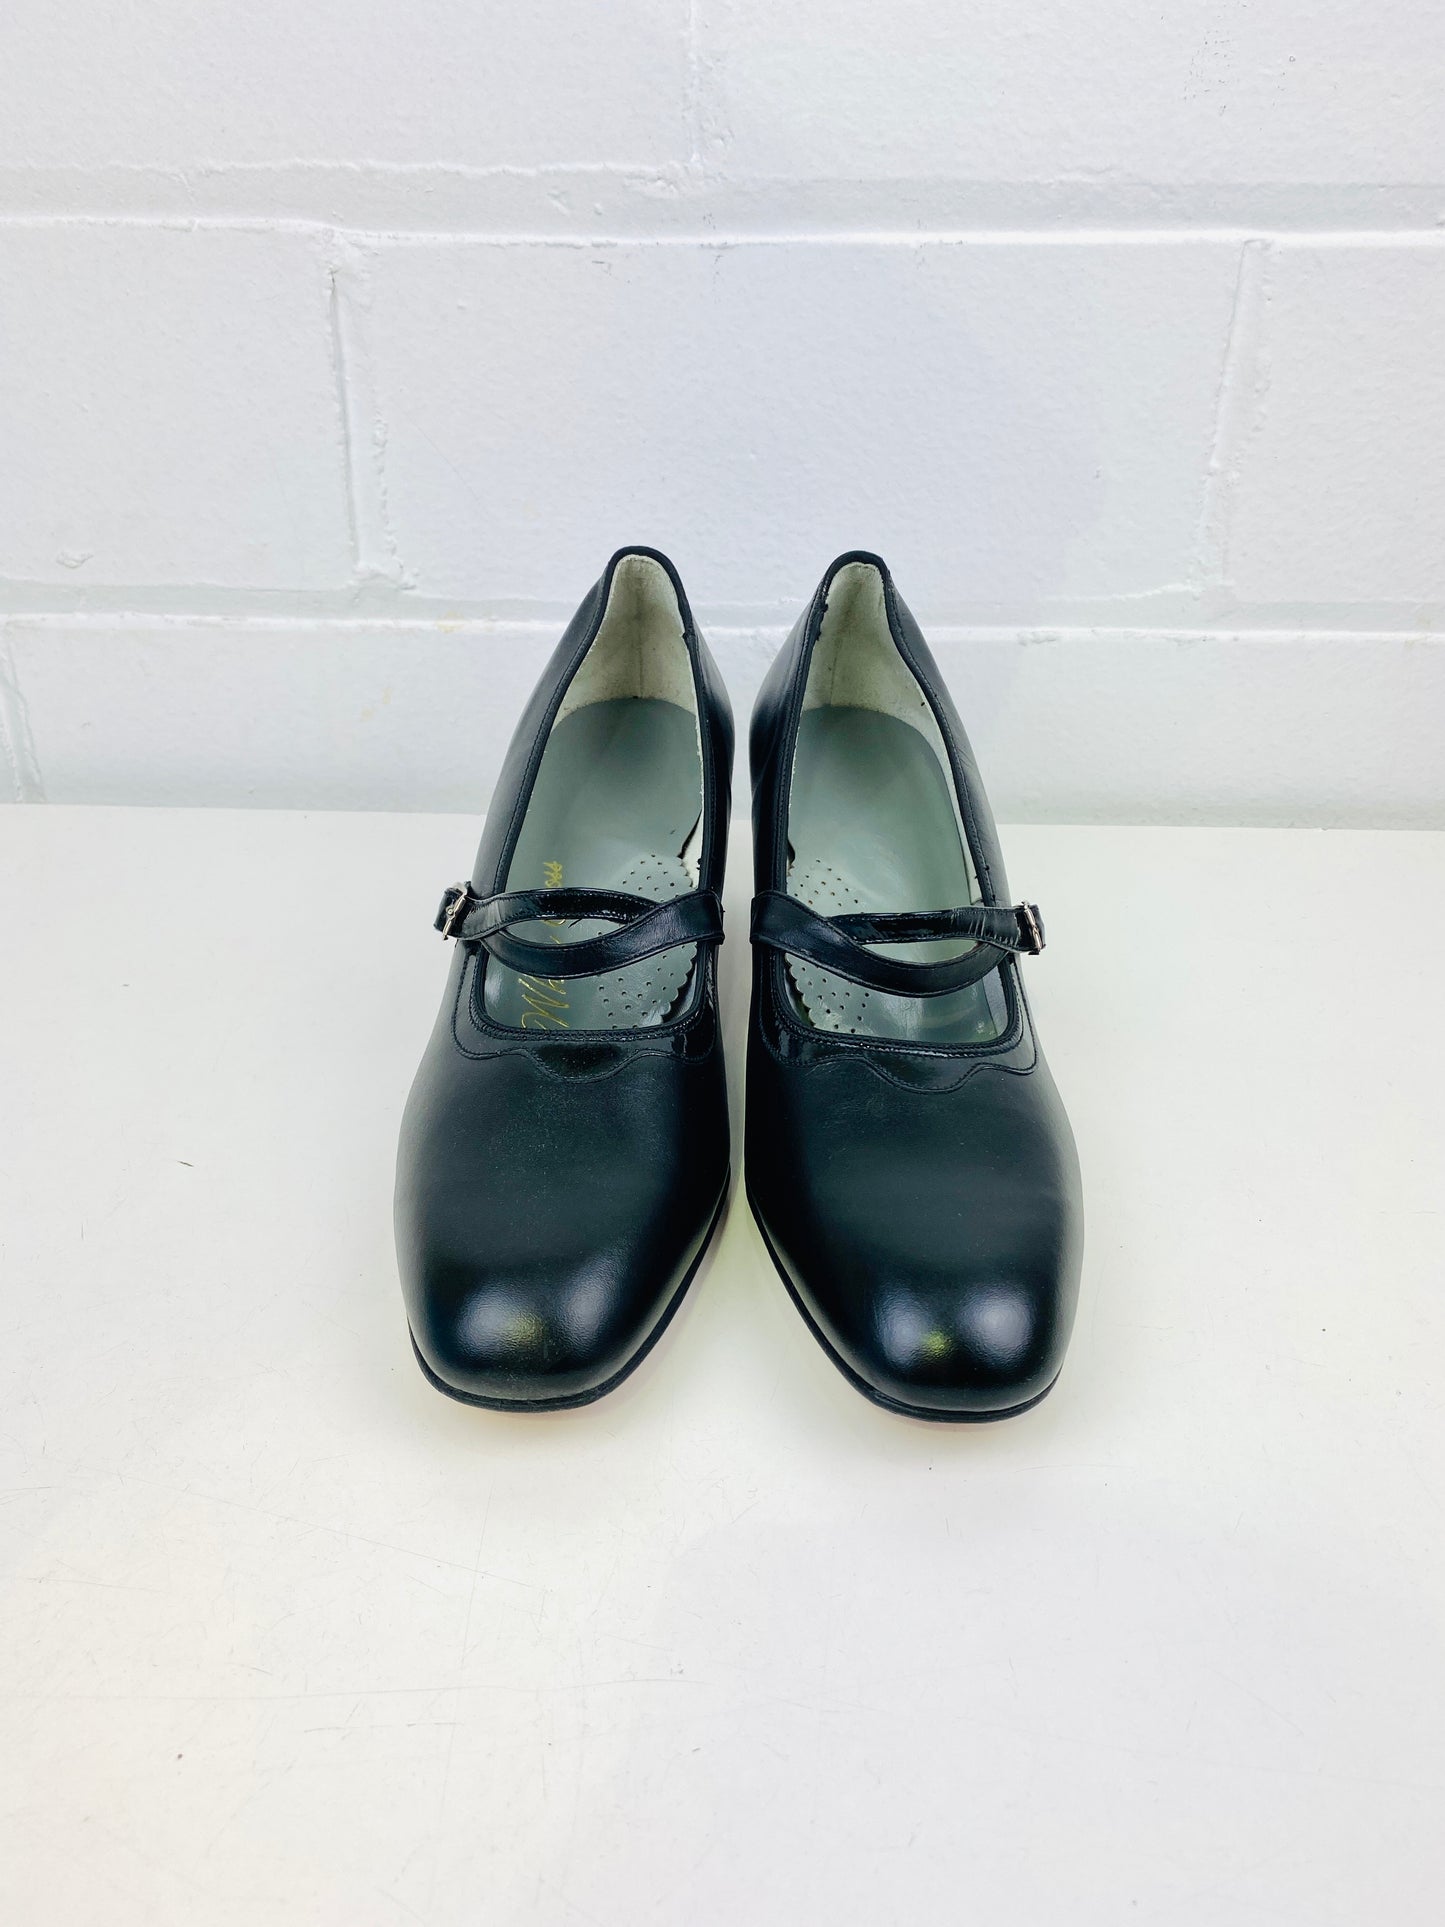 Vintage Deadstock Shoes, Women's 1980s Black Leather Mid-Heel Pumps, NOS, 8292